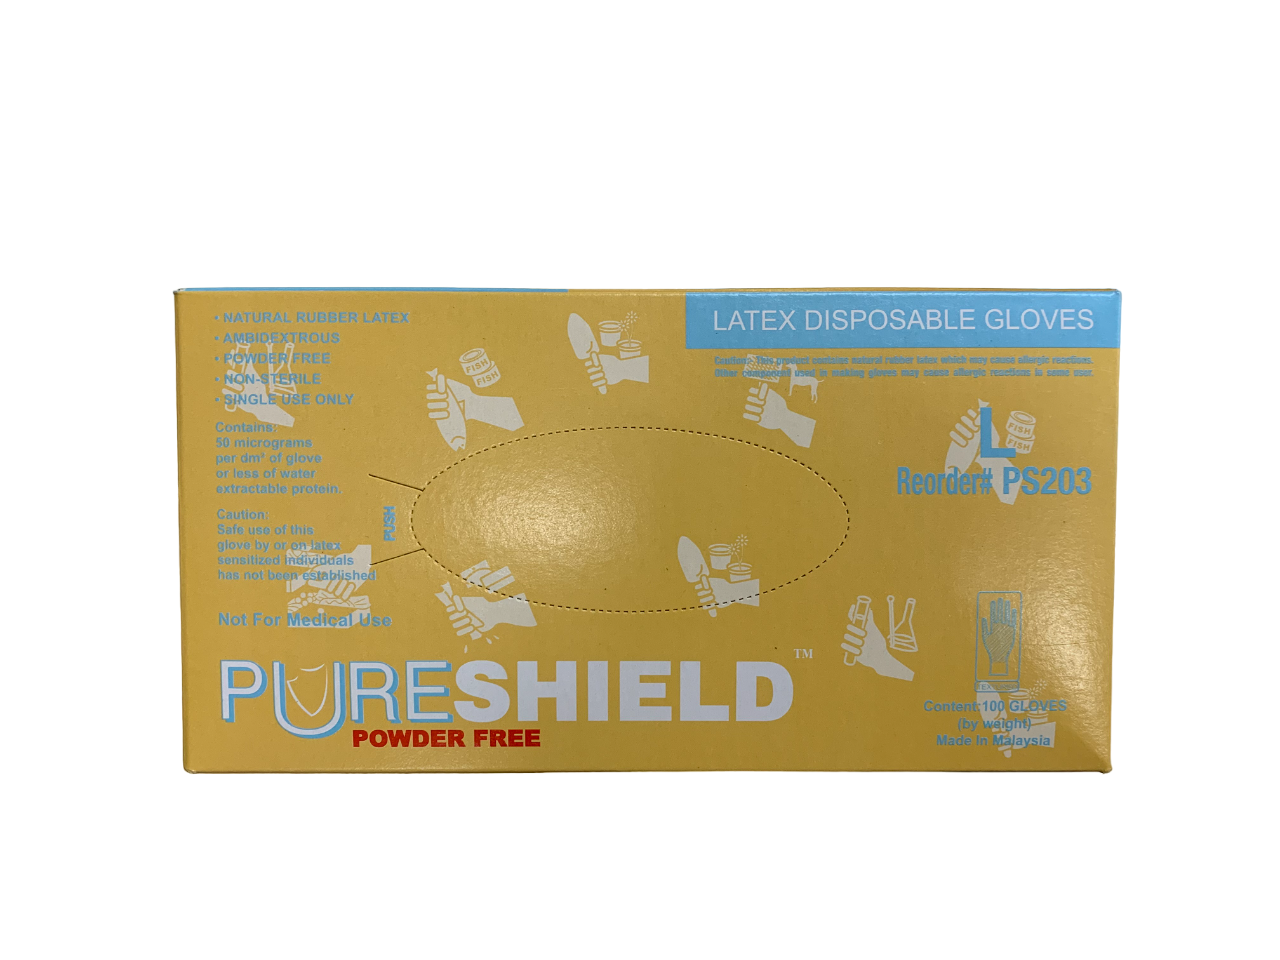 Pureshield Latex Disposable Gloves Box